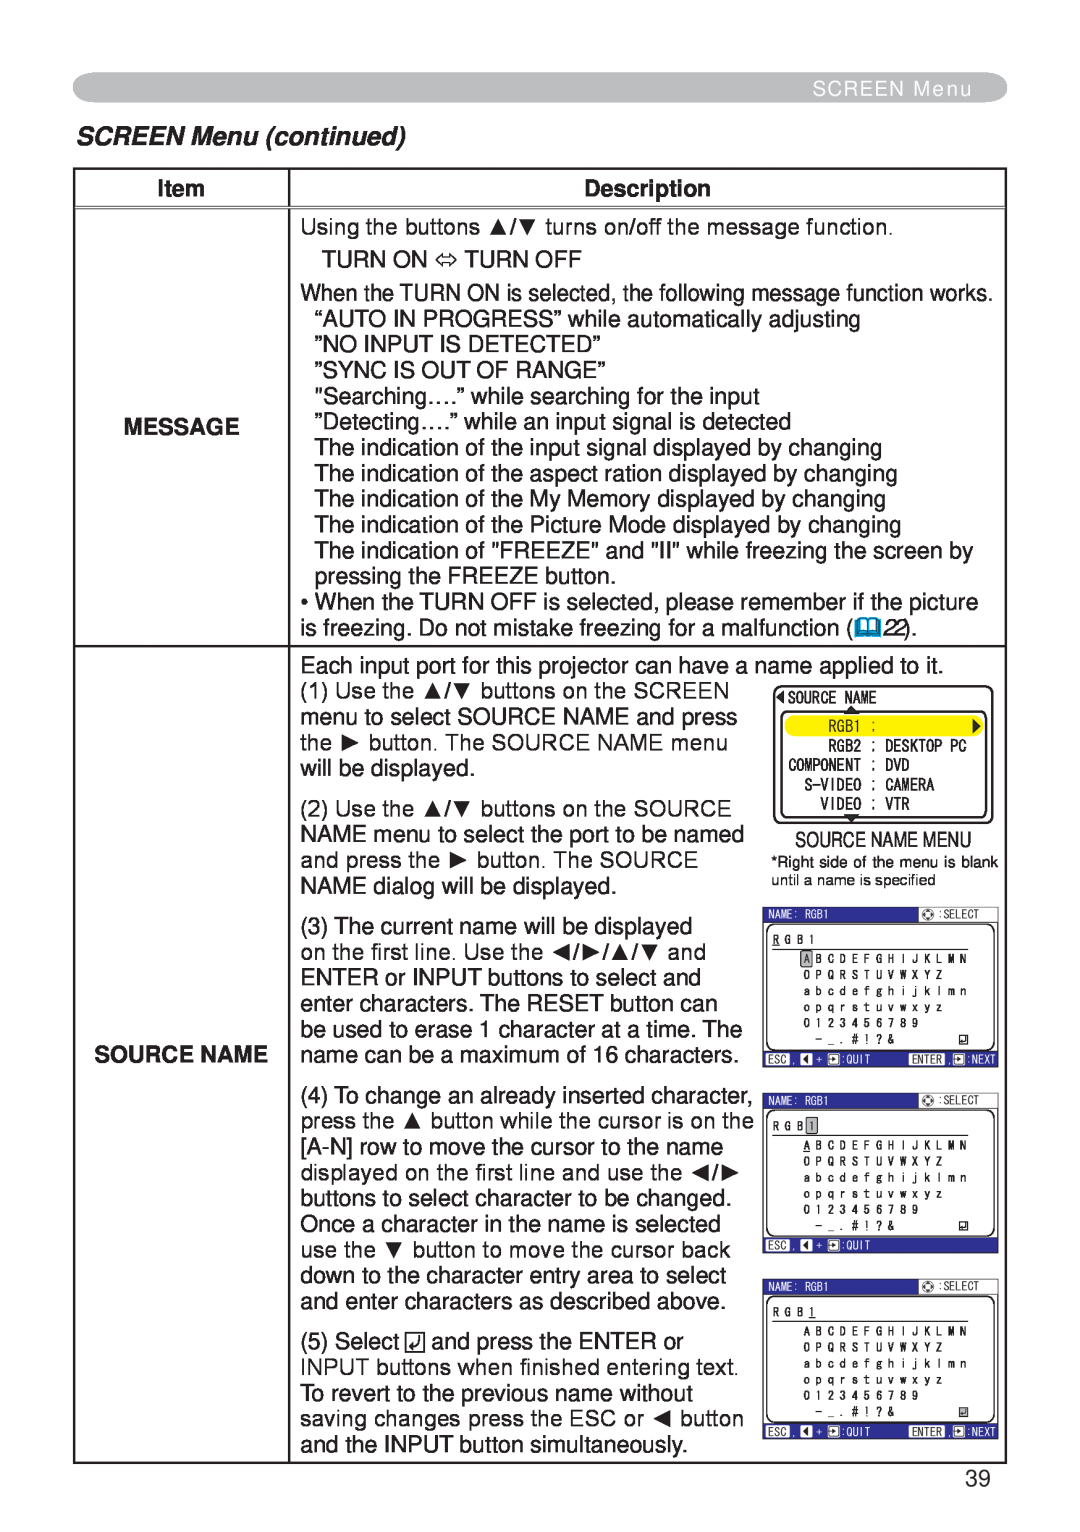 Hitachi CP-X265 user manual SCREEN Menu continued, Description, Message, Source Name 